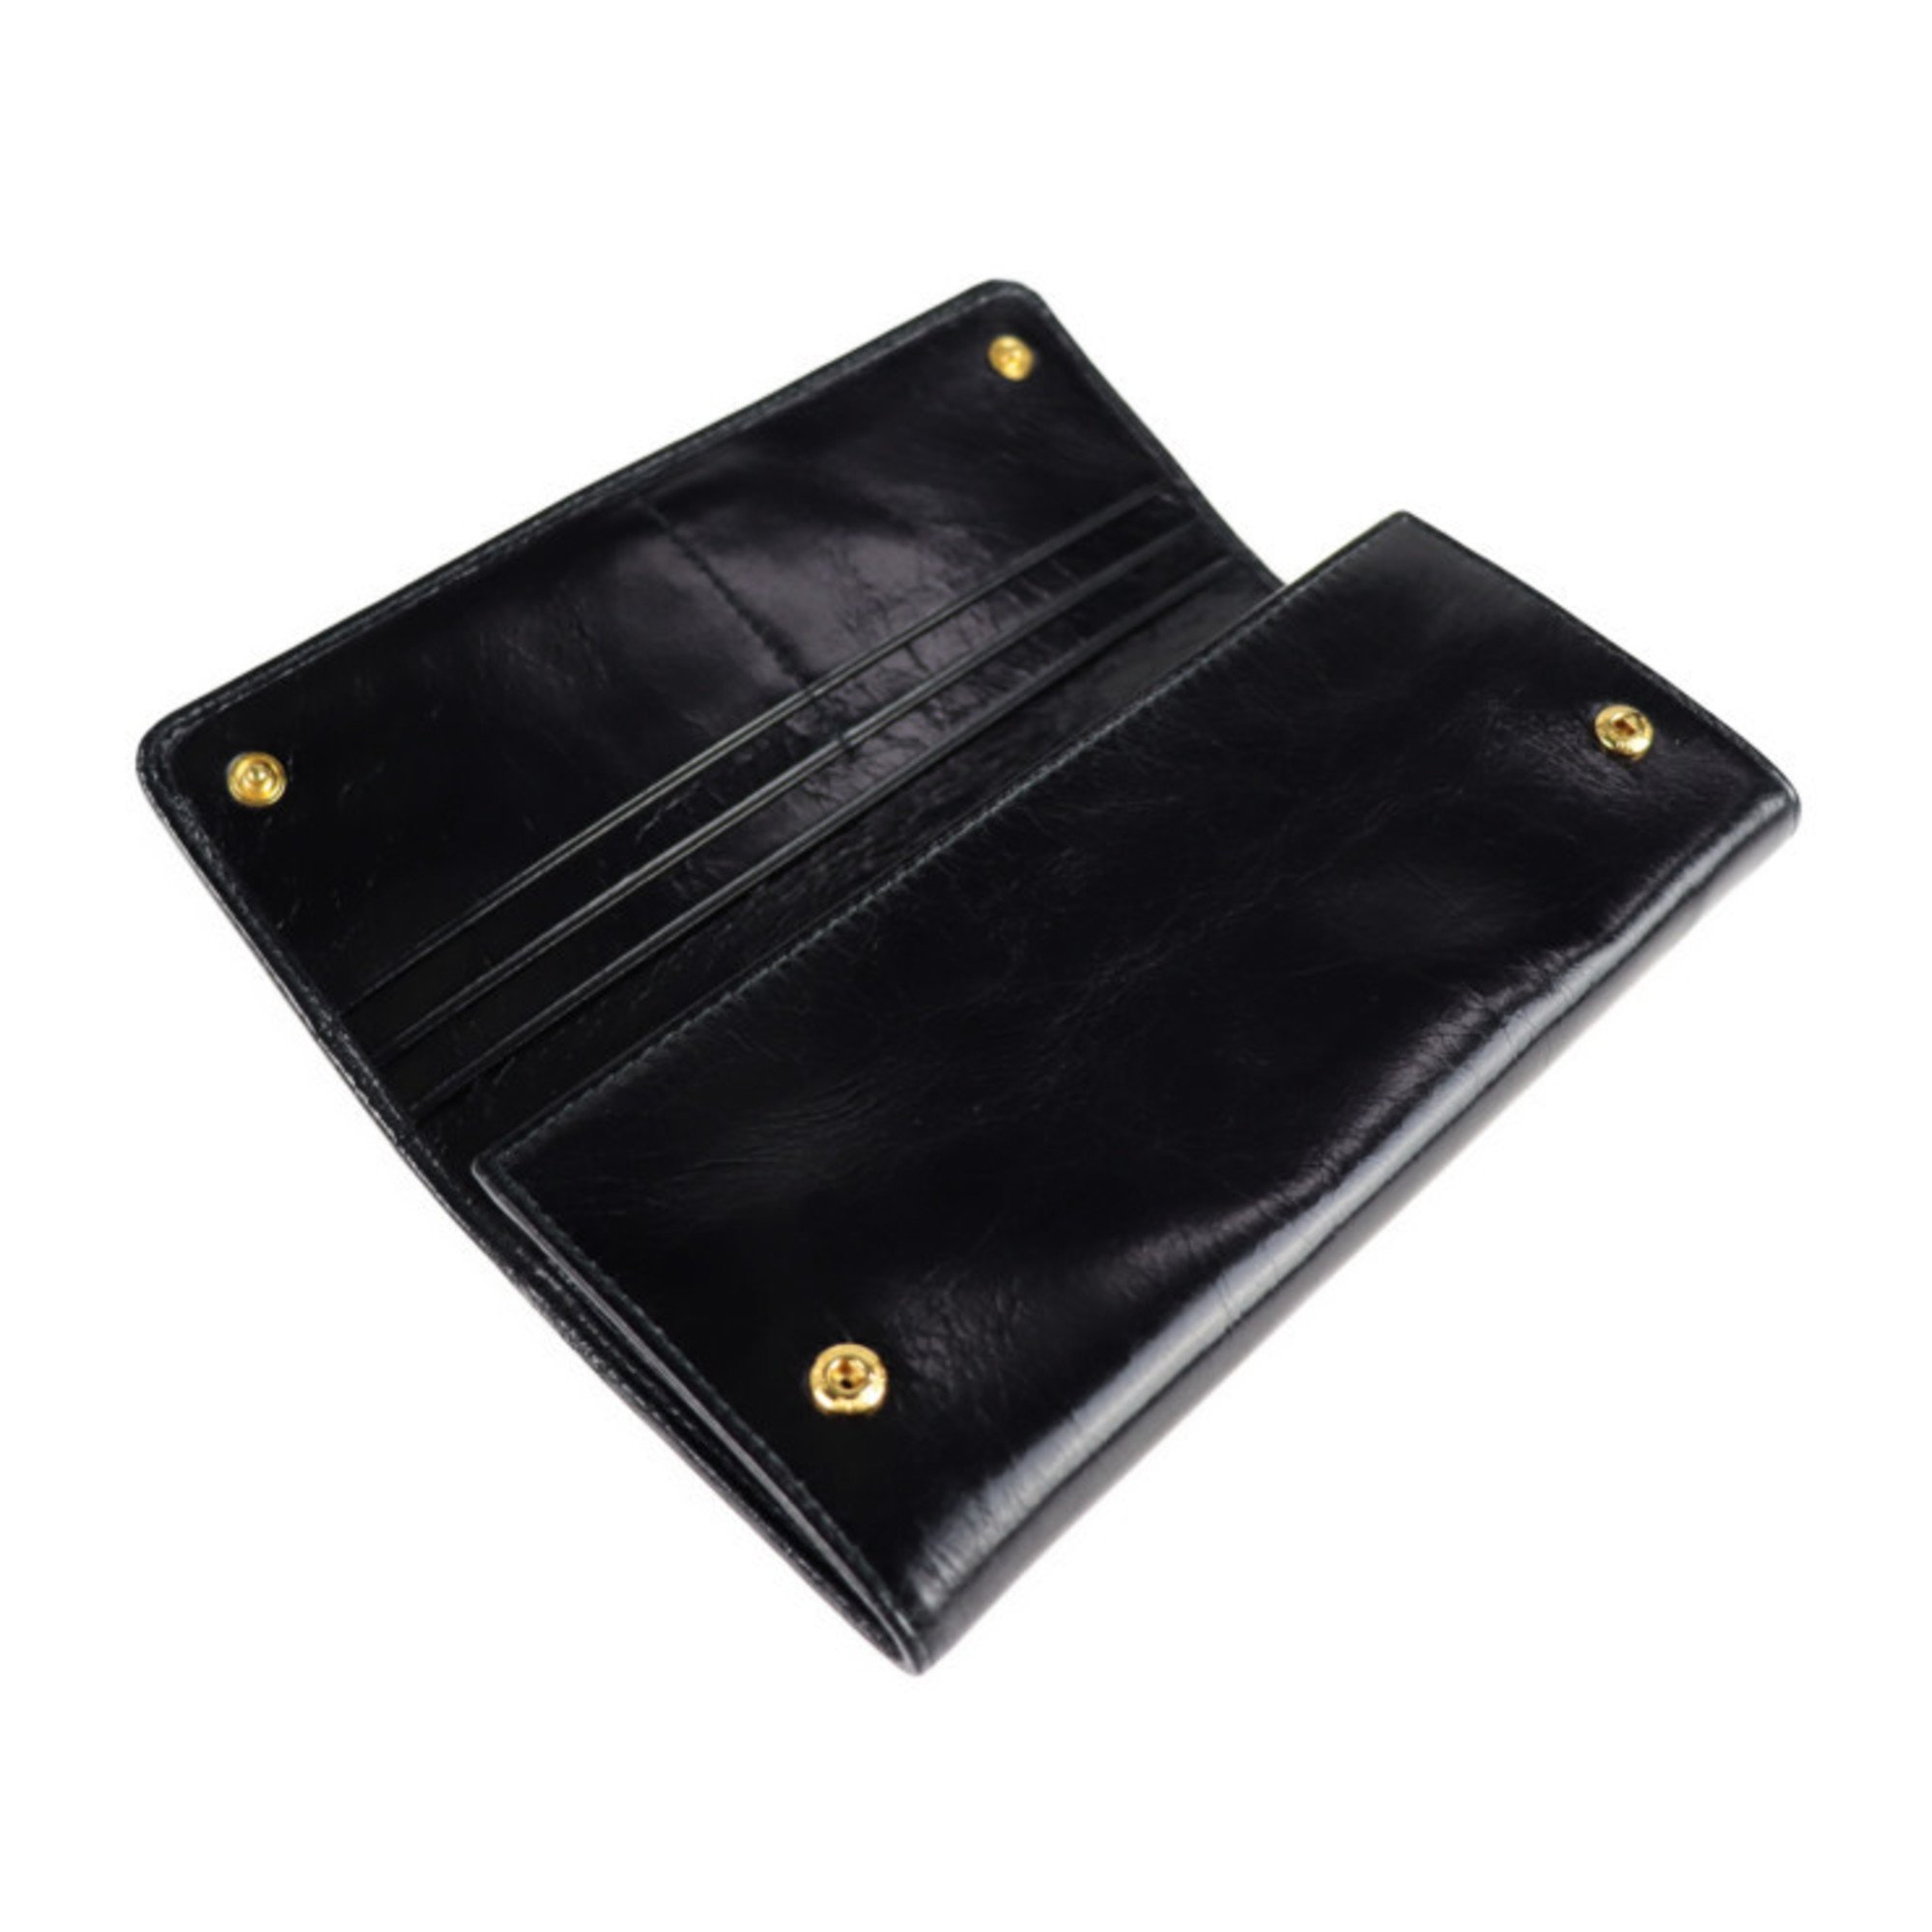 Miu Miu MIUMIU bifold wallet 5MH109 shiny calf leather antique processing NERO black long with pass case